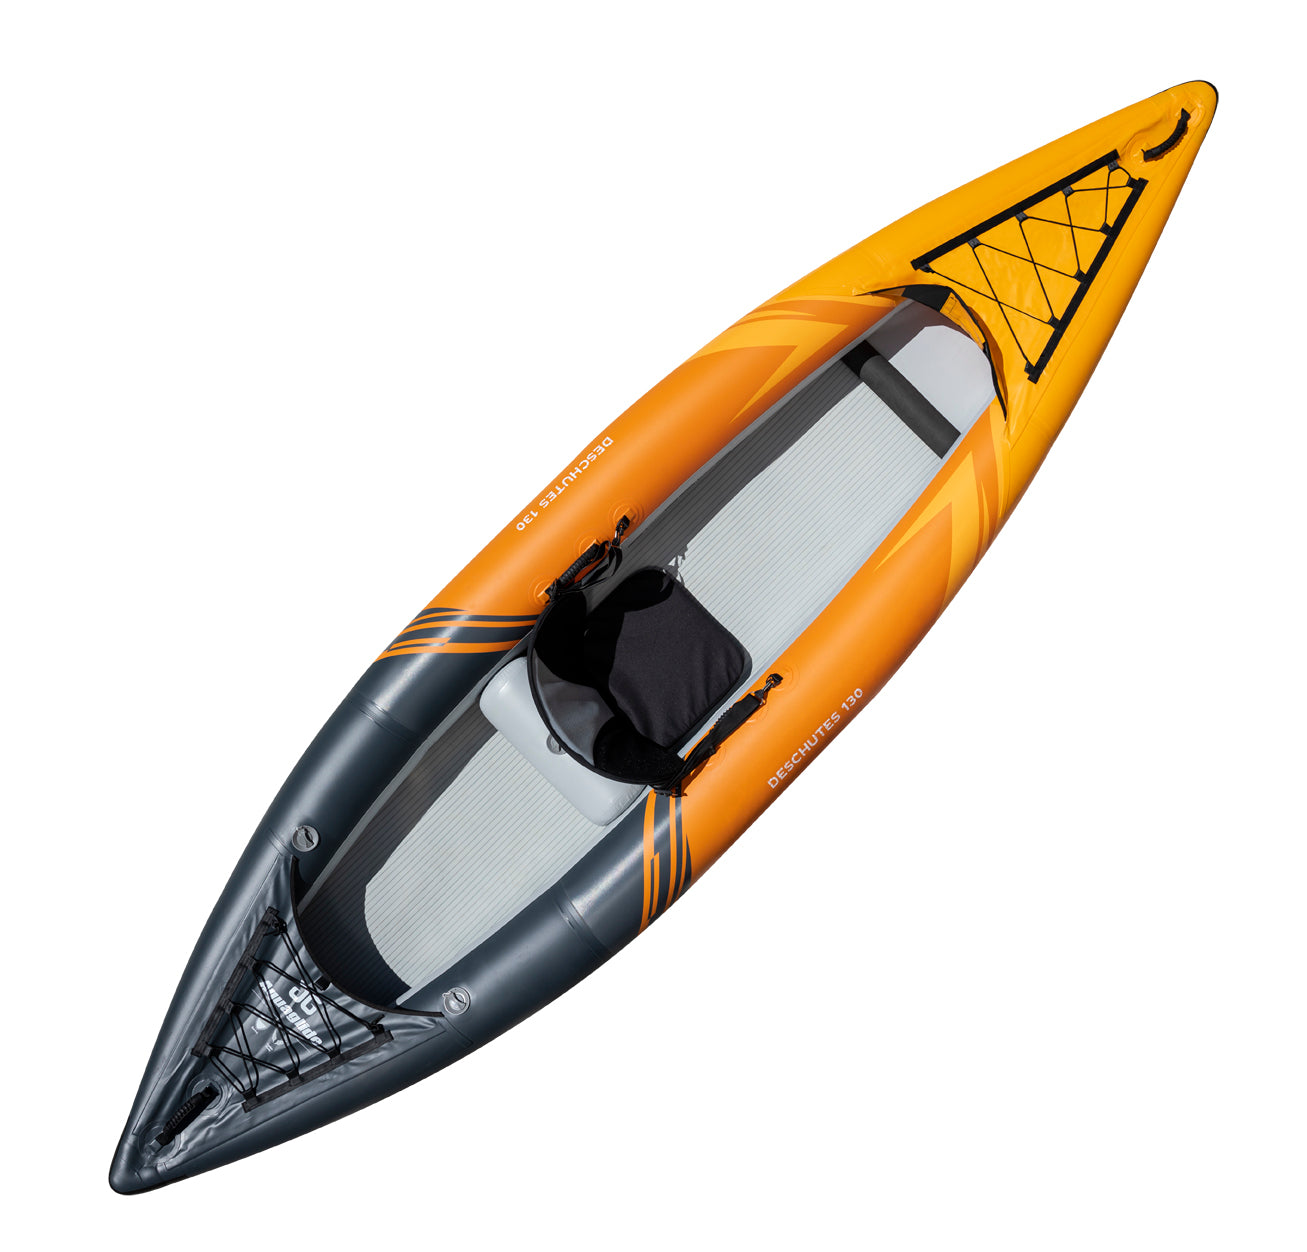 Aquaglide Deschutes 130 Inflatable Recreational Kayak- New!